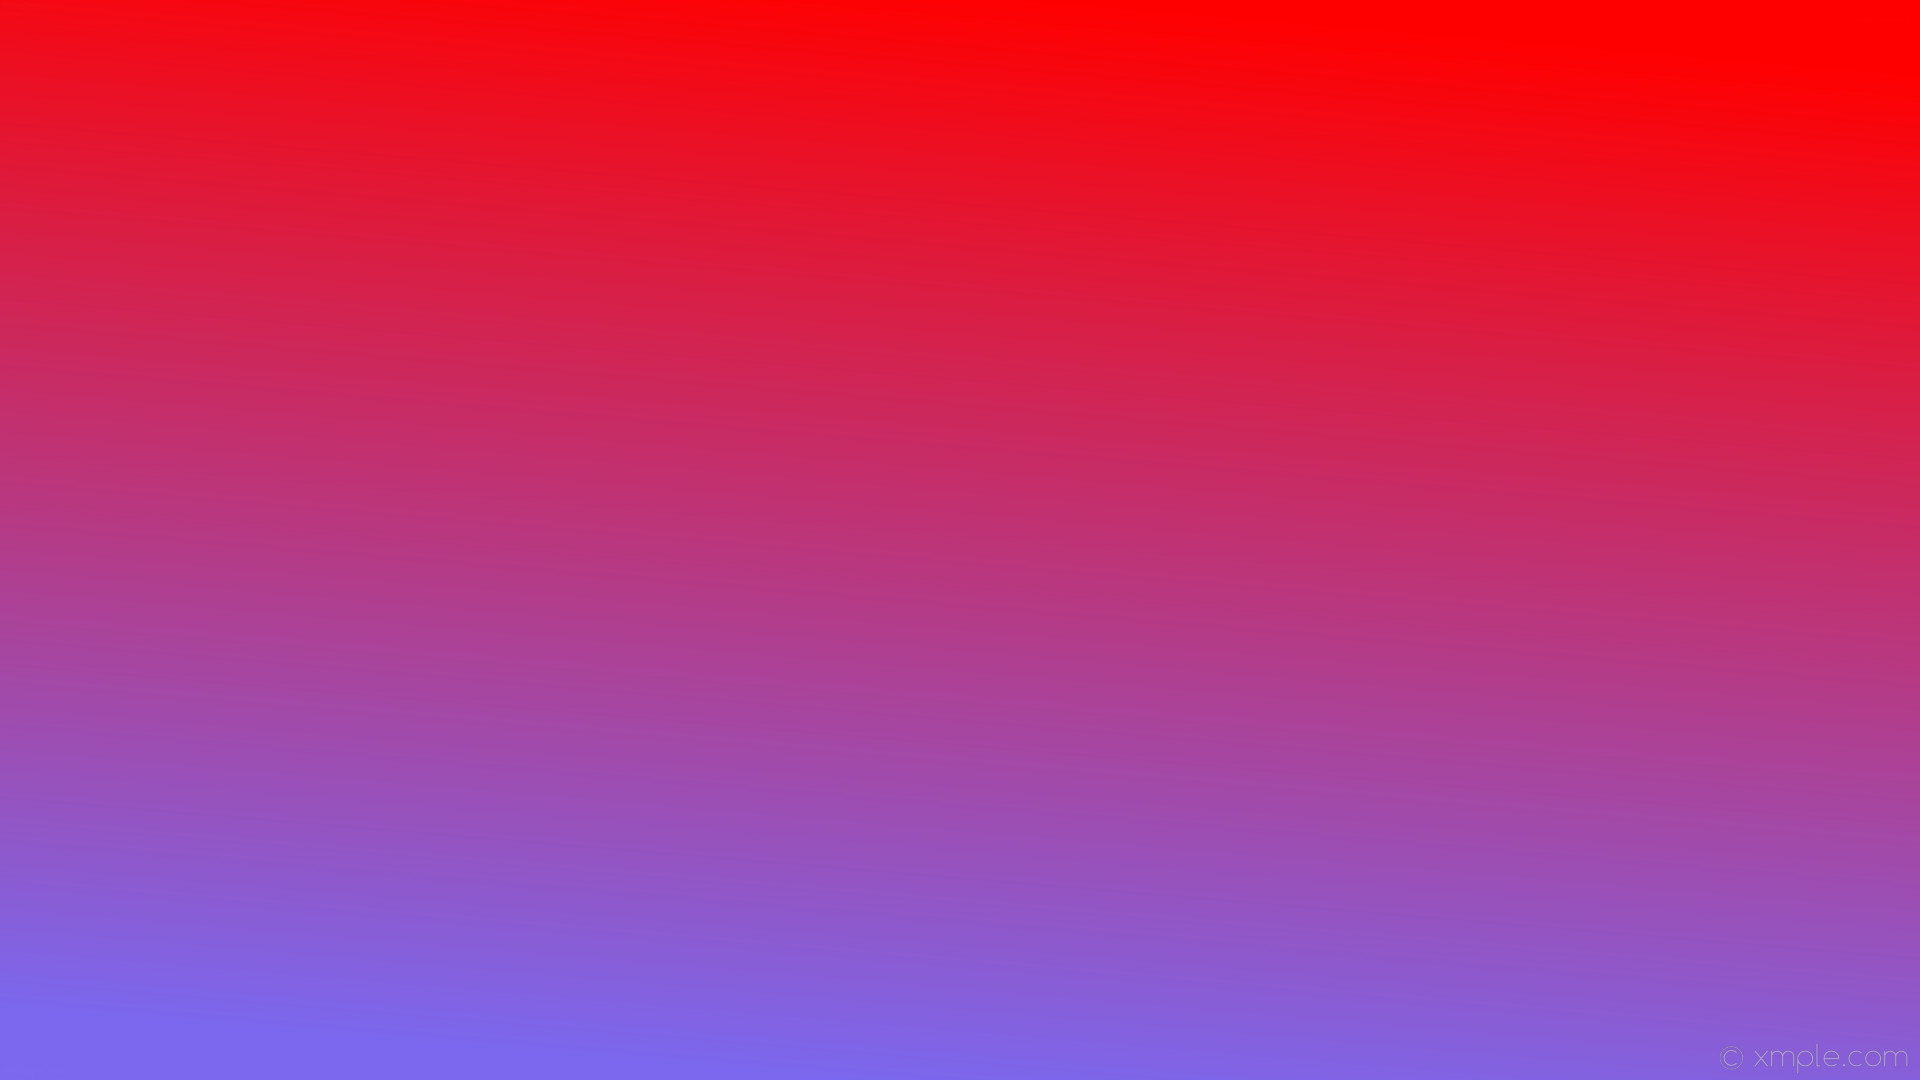 1920x1080 wallpaper red purple gradient linear medium slate blue #7b68ee #ff0000 255Â°